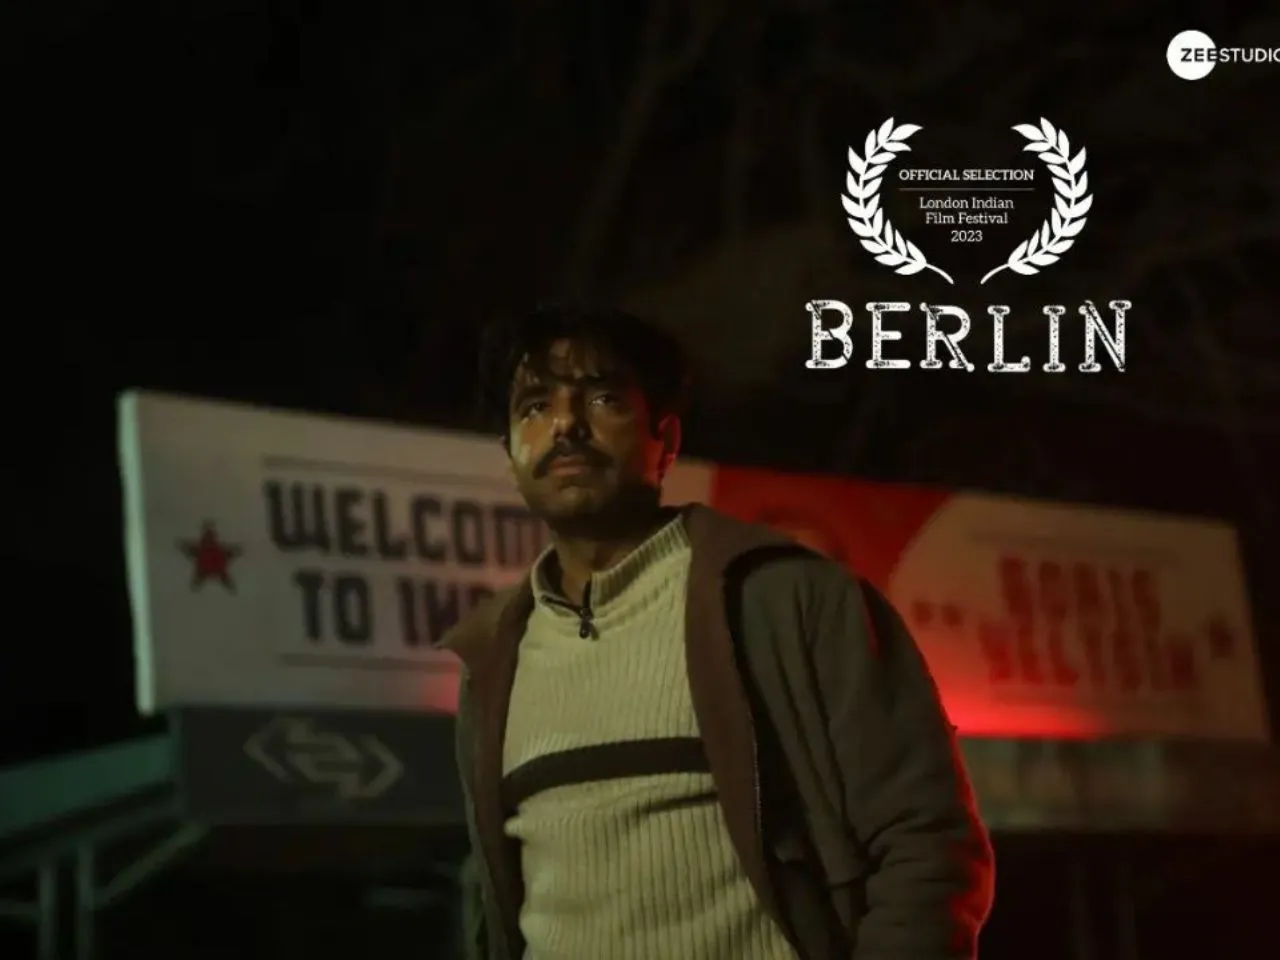 Berlin review: Refreshing script, impressive performances, and sensitivity